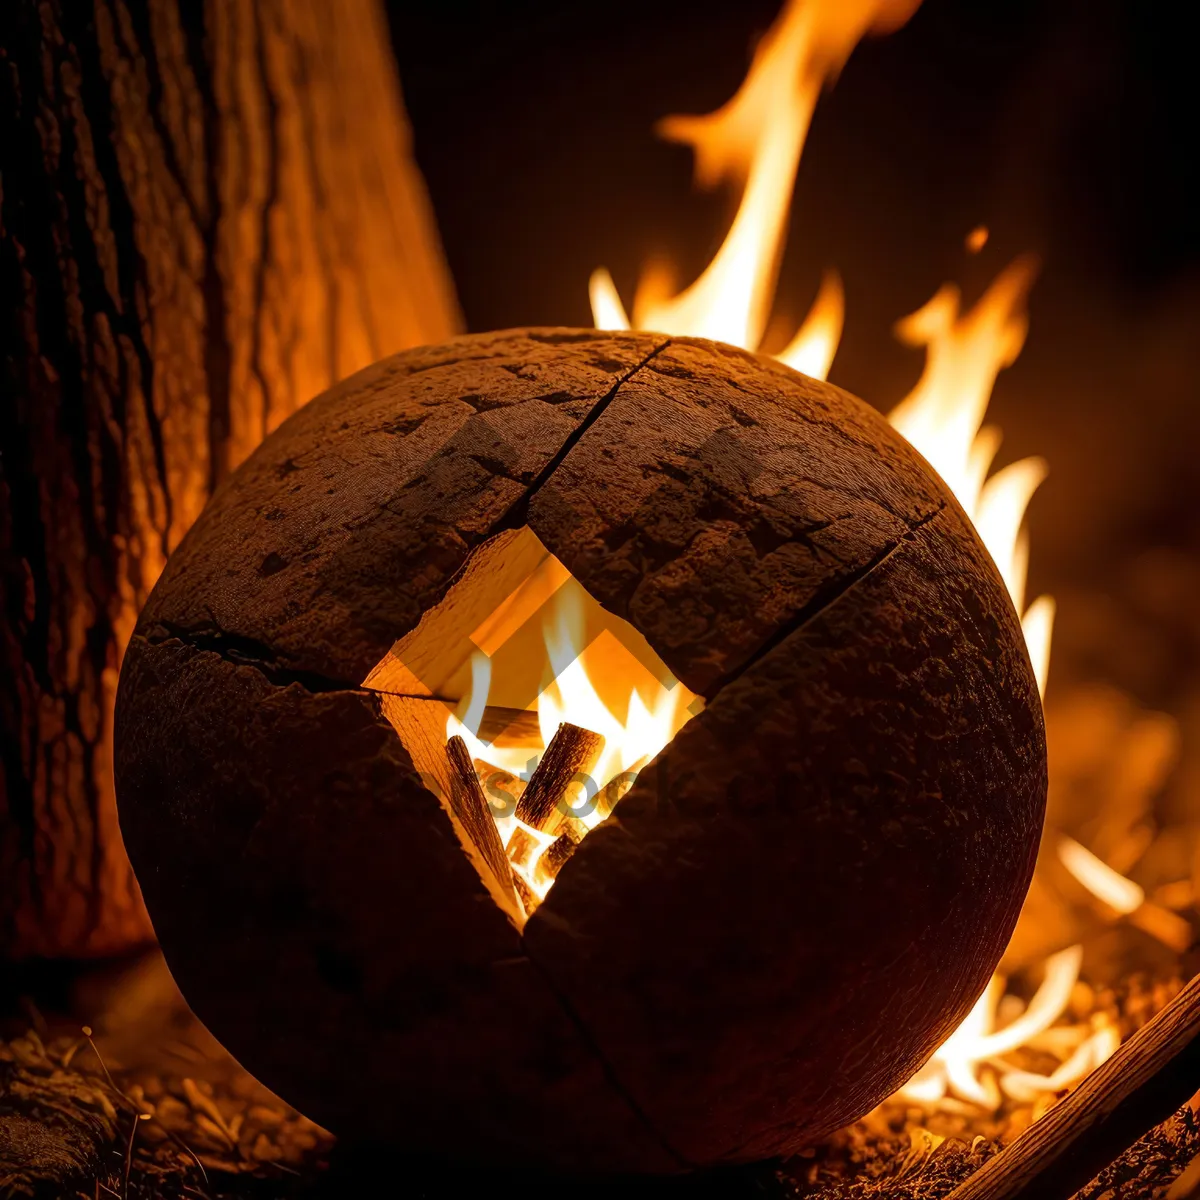 Picture of Glowing Pumpkin Lantern - Spooky Halloween Decoration